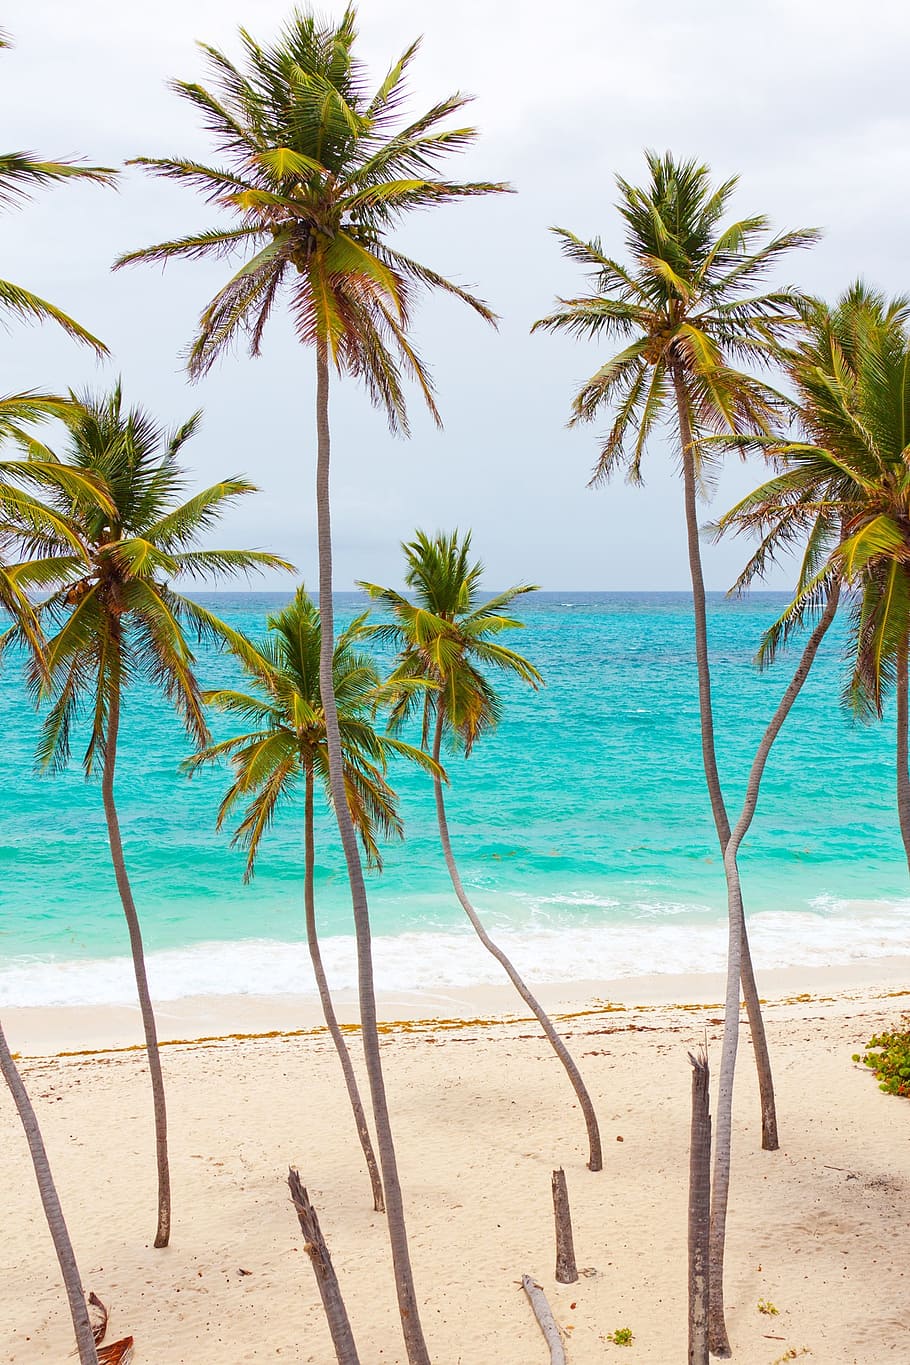 beach, beautiful, blue, coast, landscape, ocean, palm, palm trees, paradise, relax